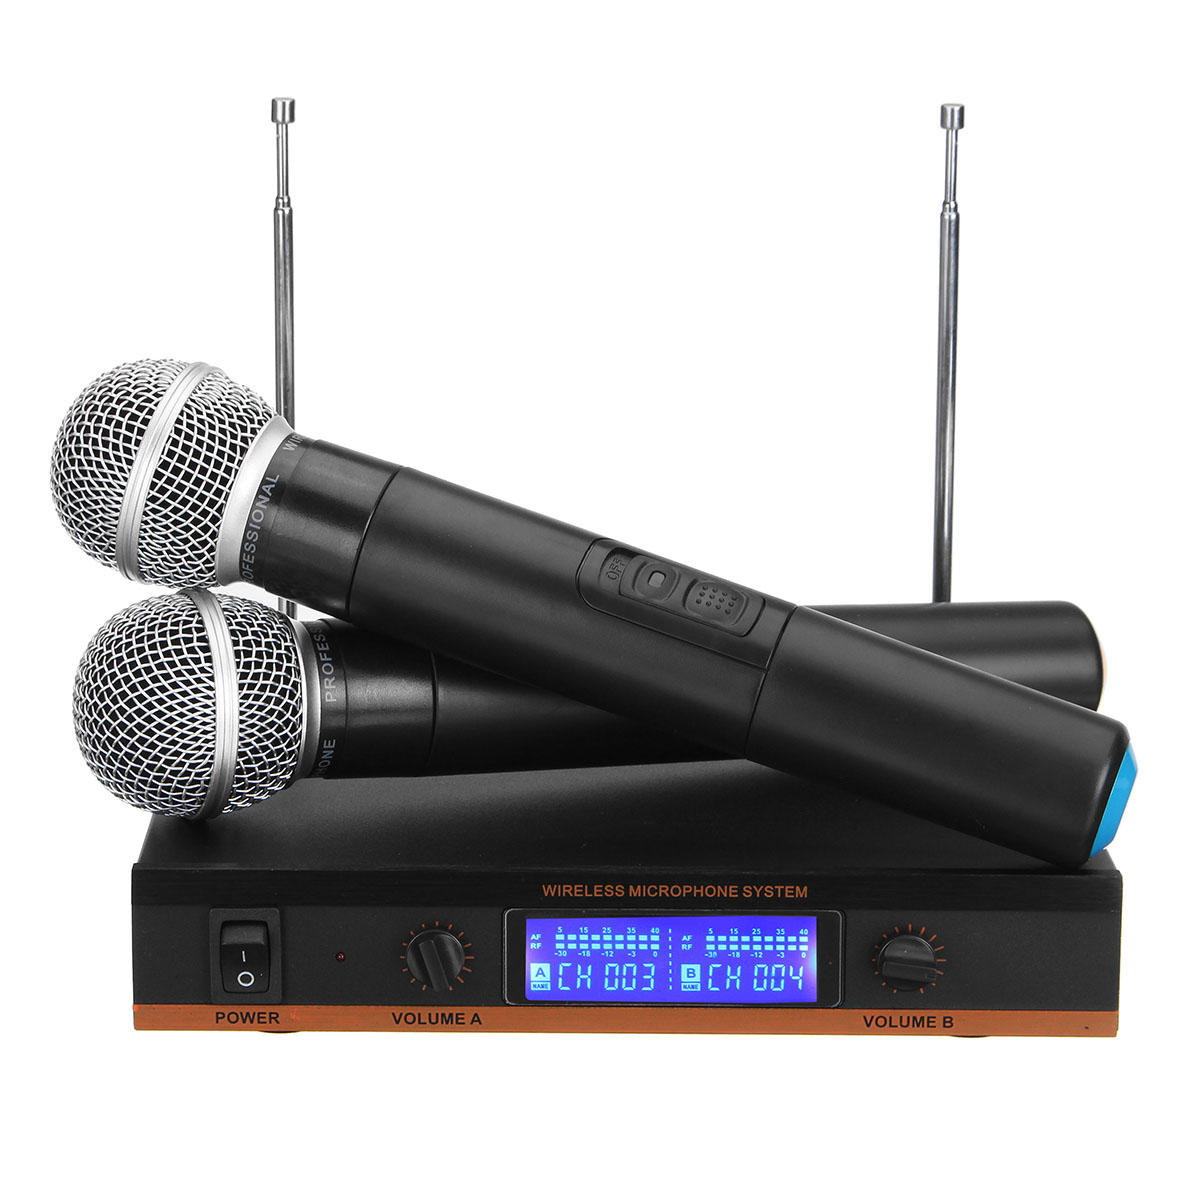 

UHF Multifunction Wireless Portable Handheld Microphone System for Karaoke KTV Speech Meeting Stage DJ